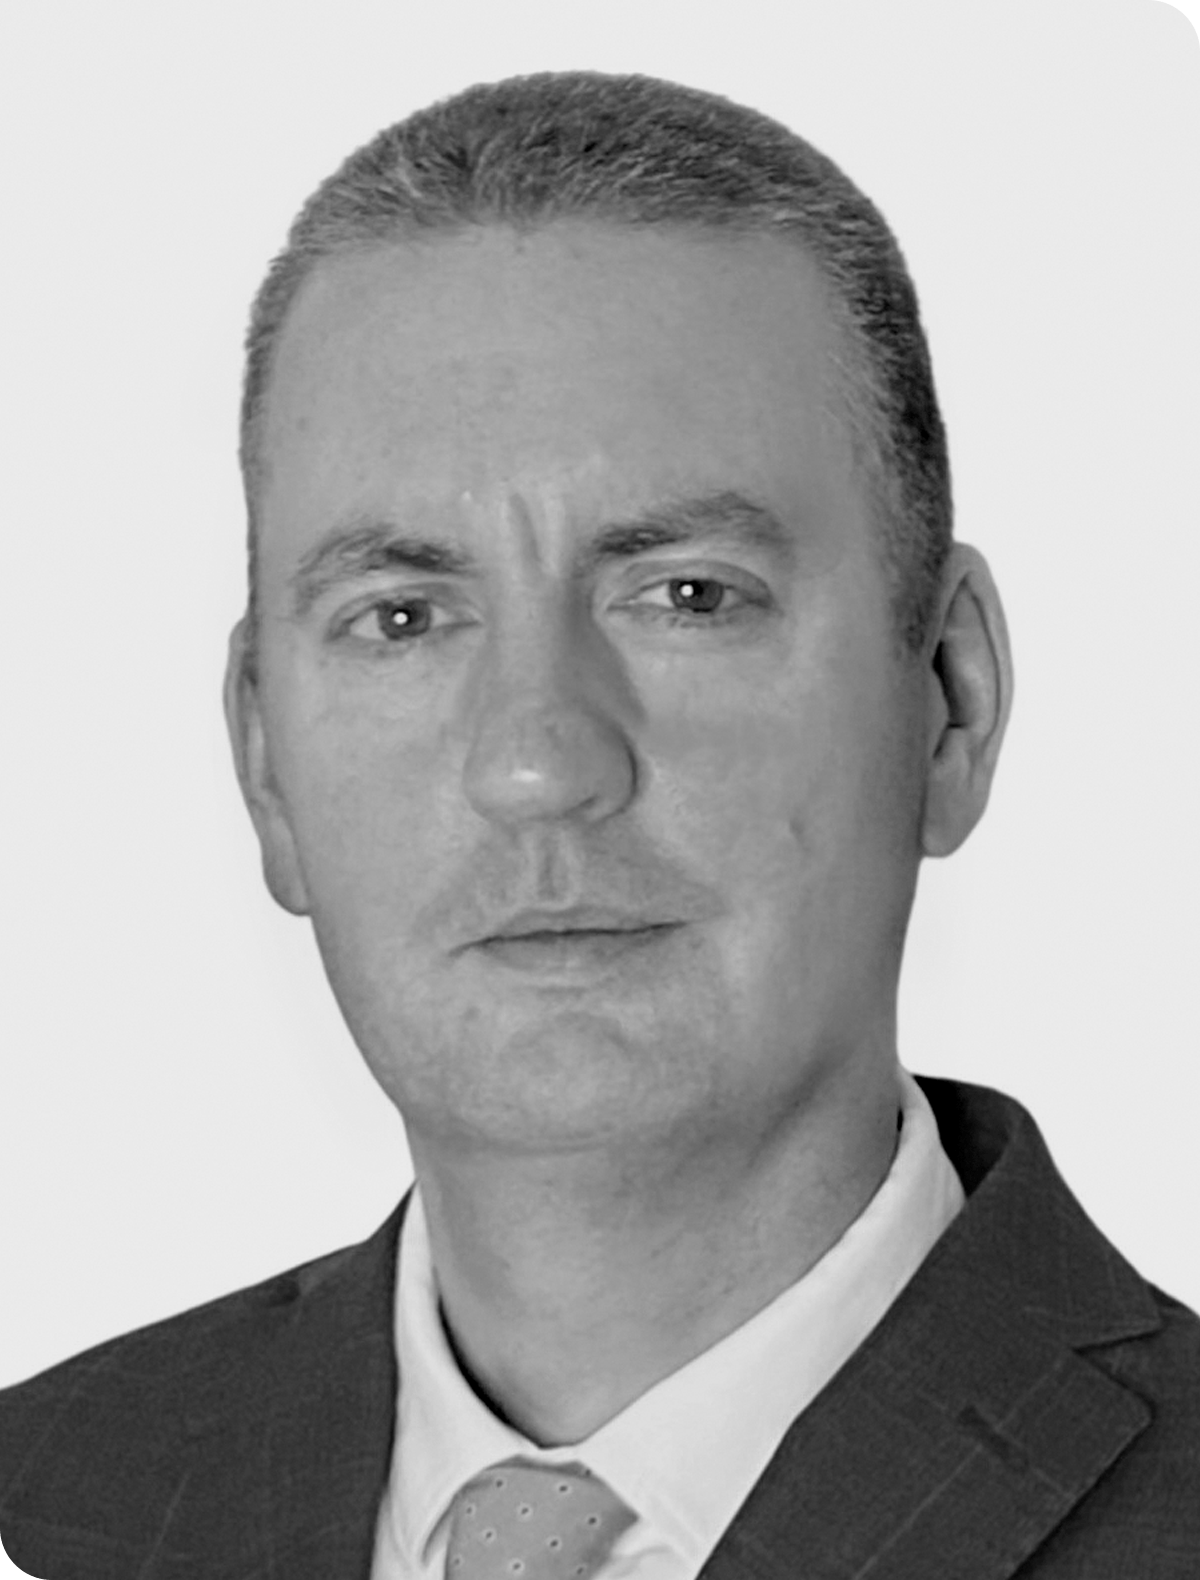 Photograph of Matt Robinson, Managing Director